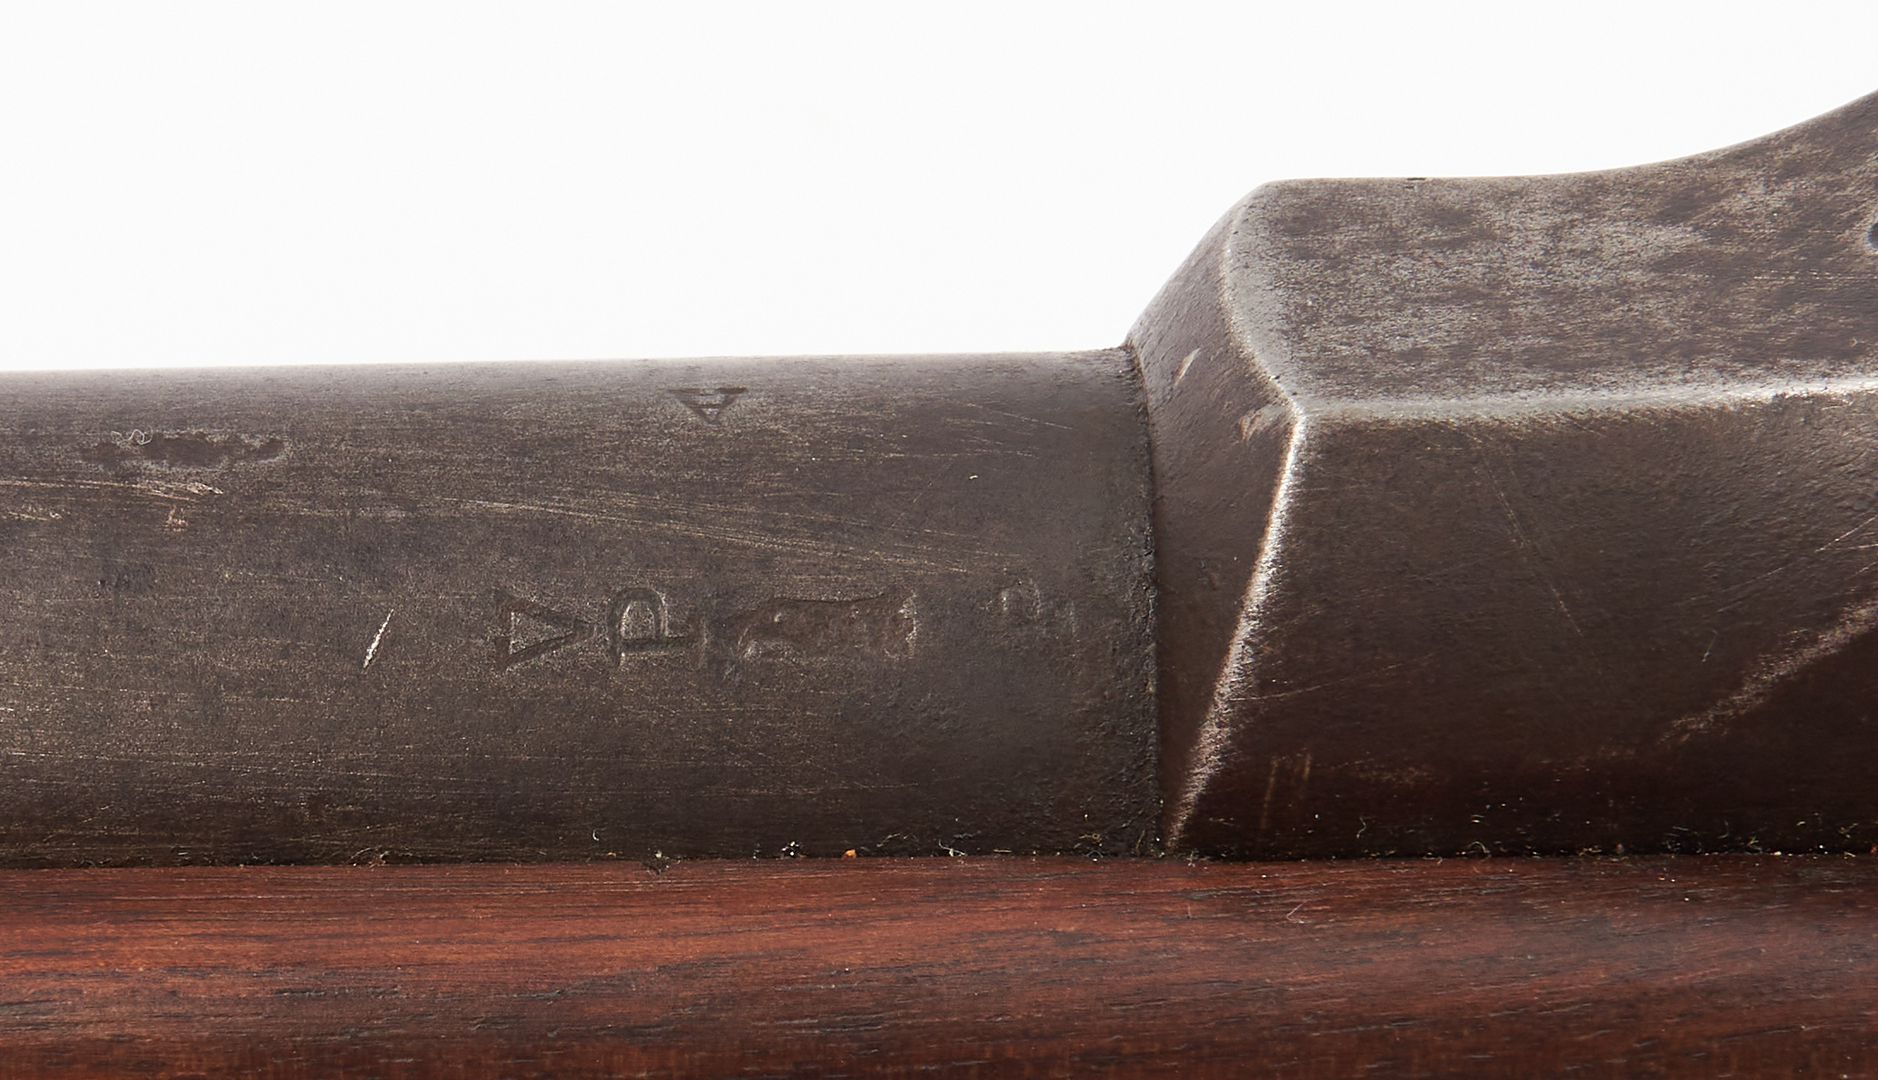 Lot 621: U.S. Model 1884 Springfield Rifle, .45-70 cal.